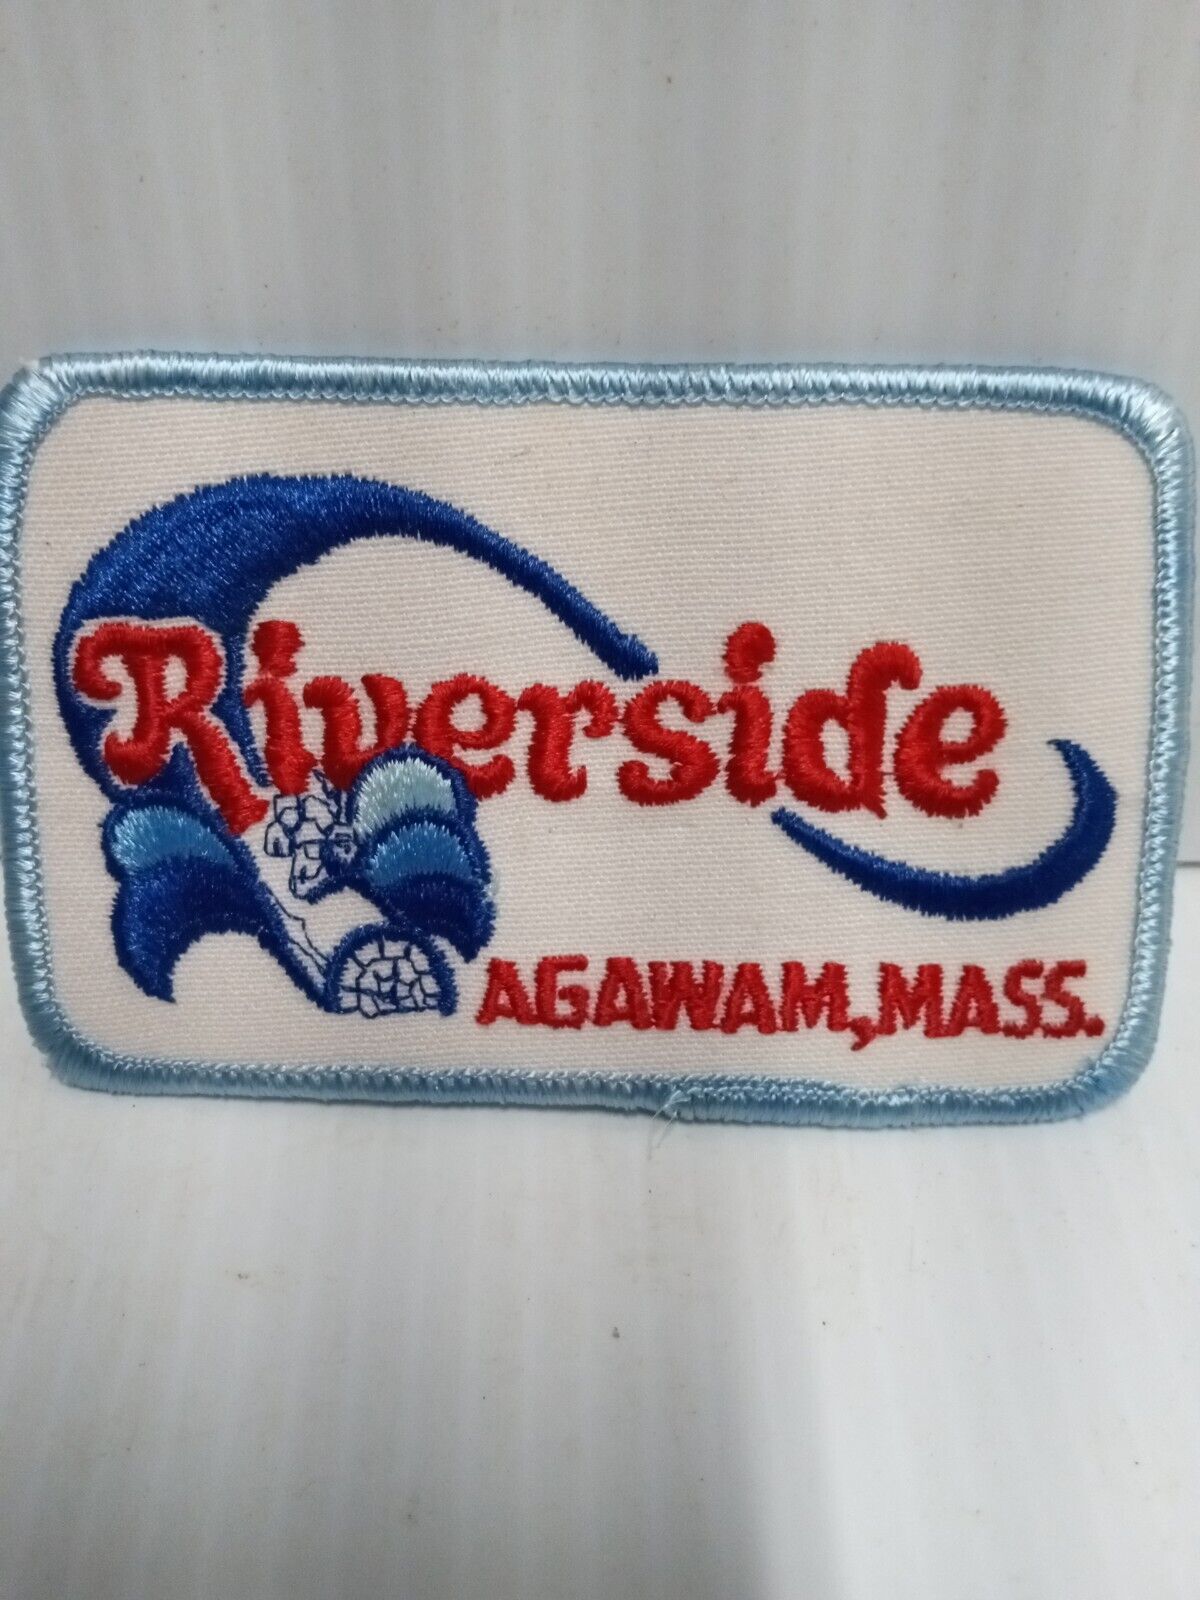 Vintage Embroidered Patch - Riverside Amusement Park,  Agawam Mass (FC 204/2)